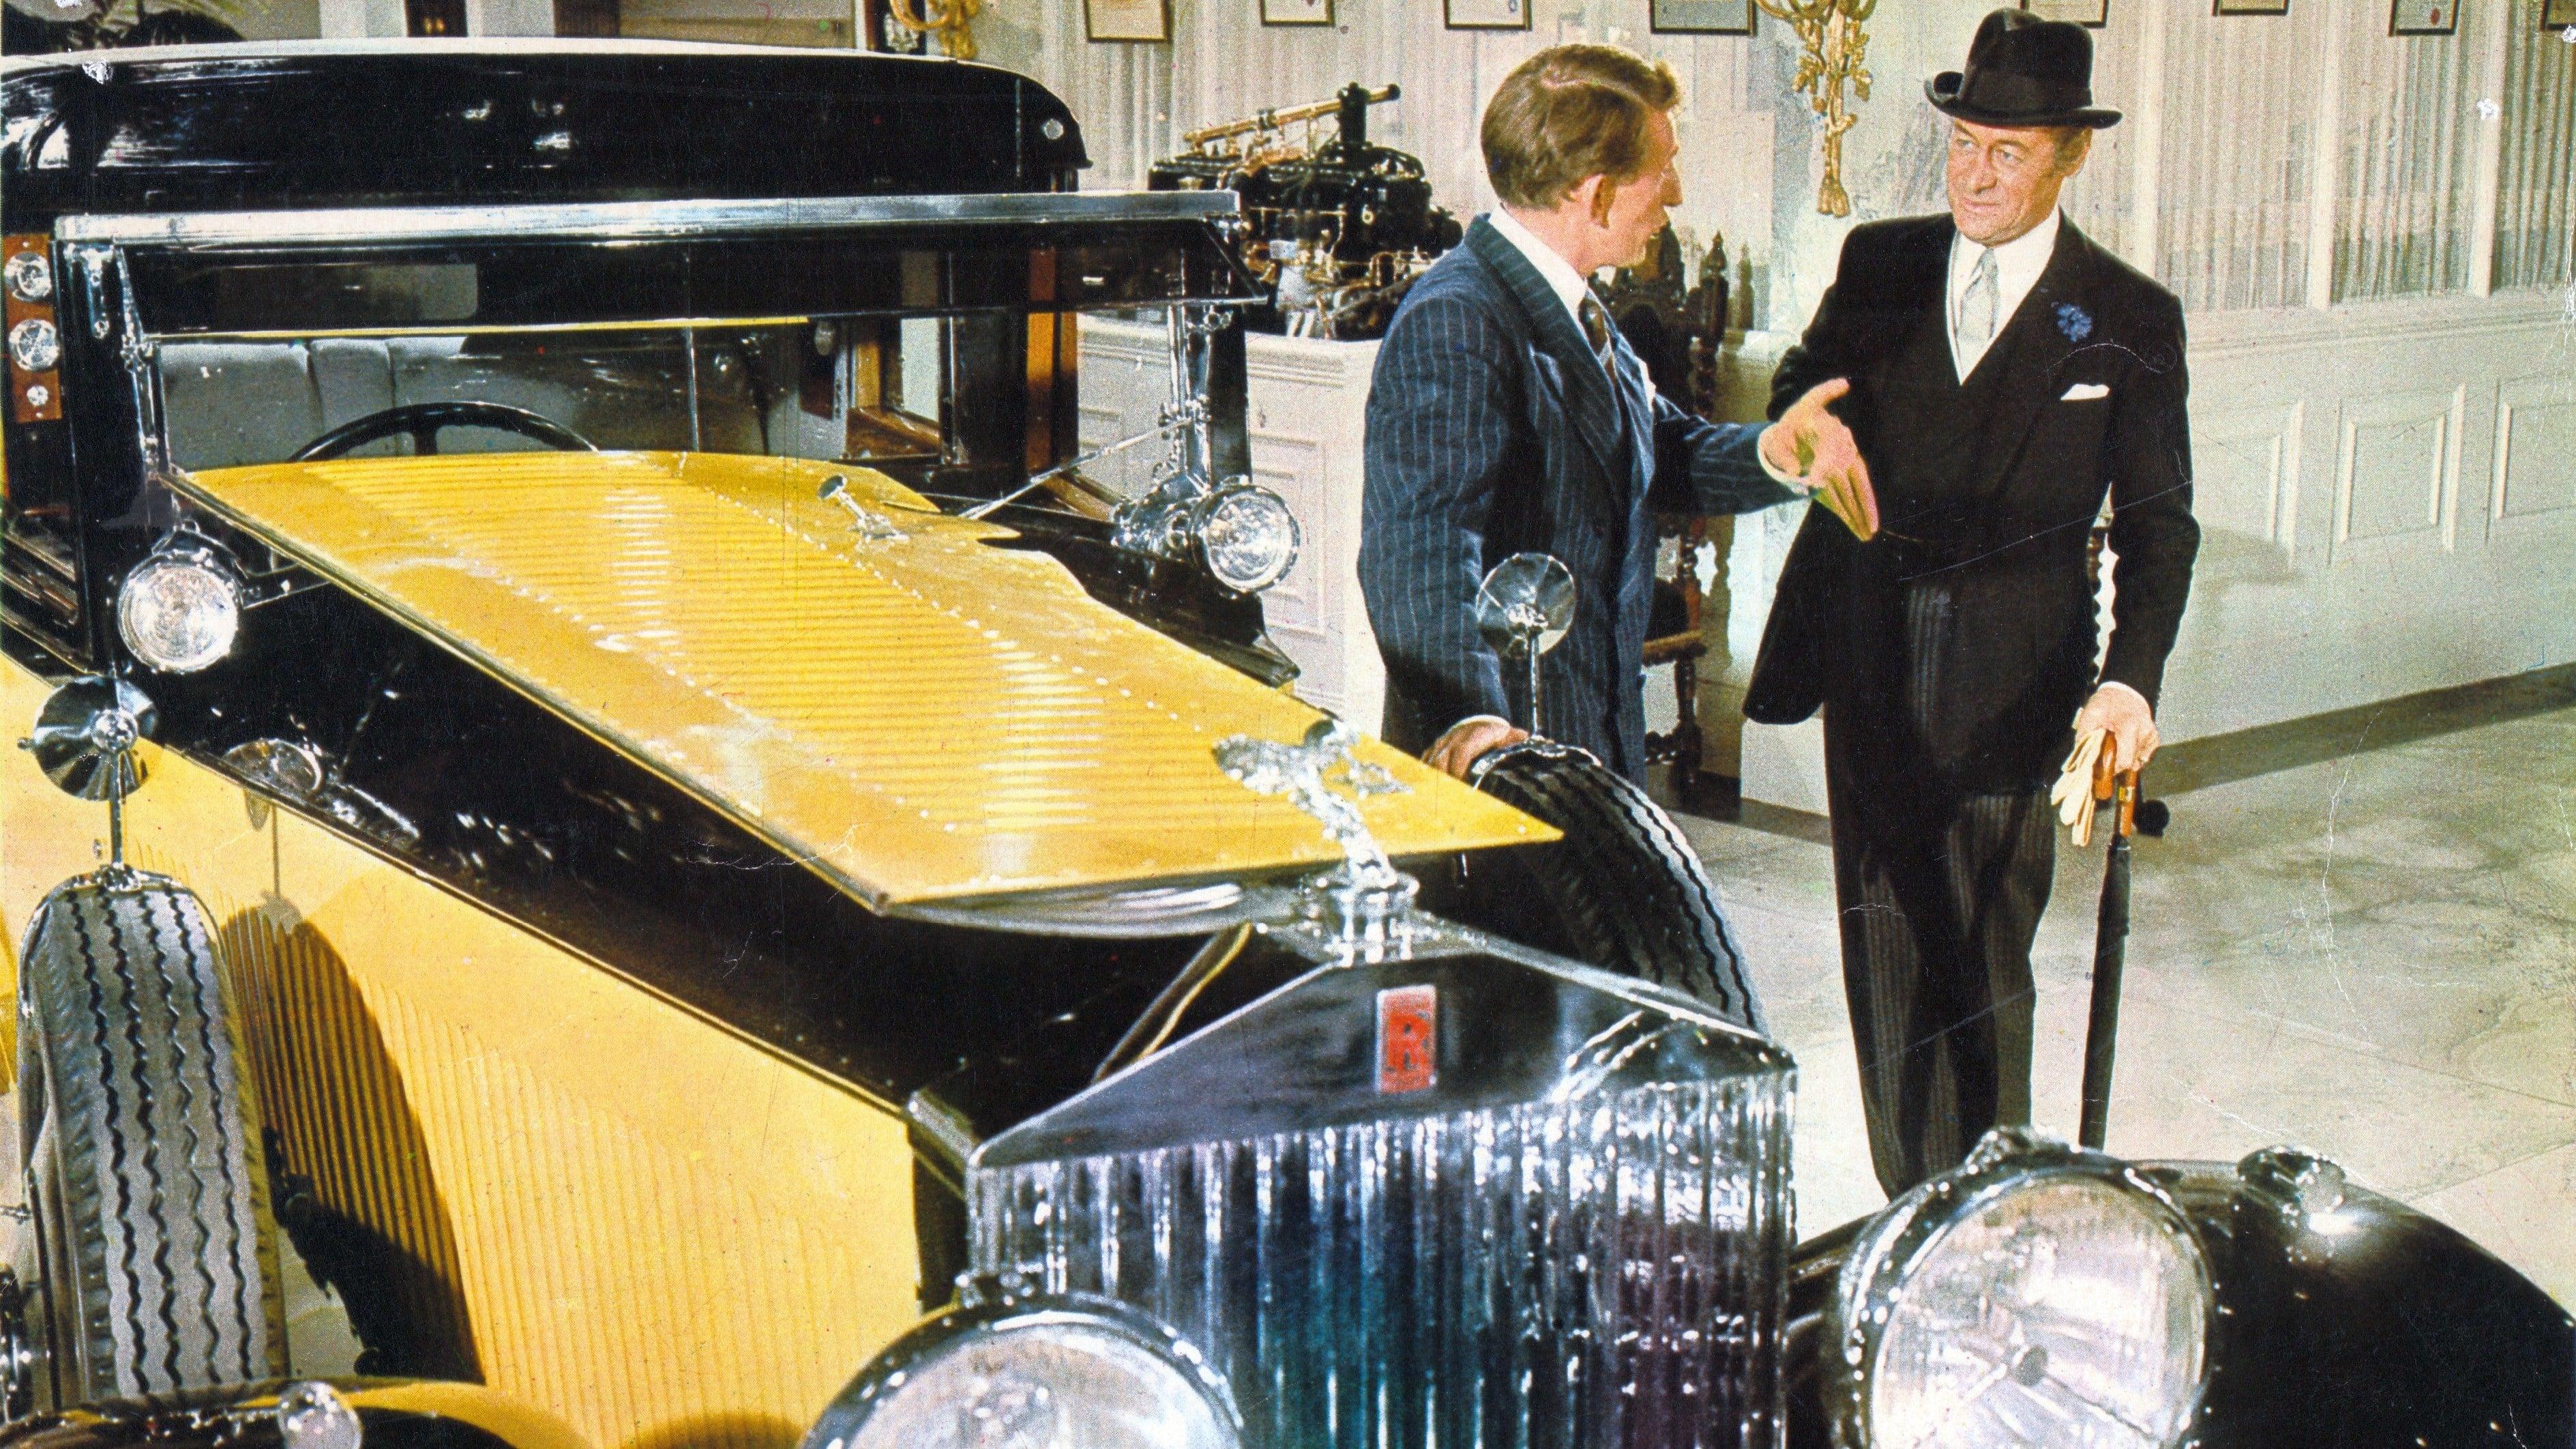 The Yellow Rolls-Royce backdrop